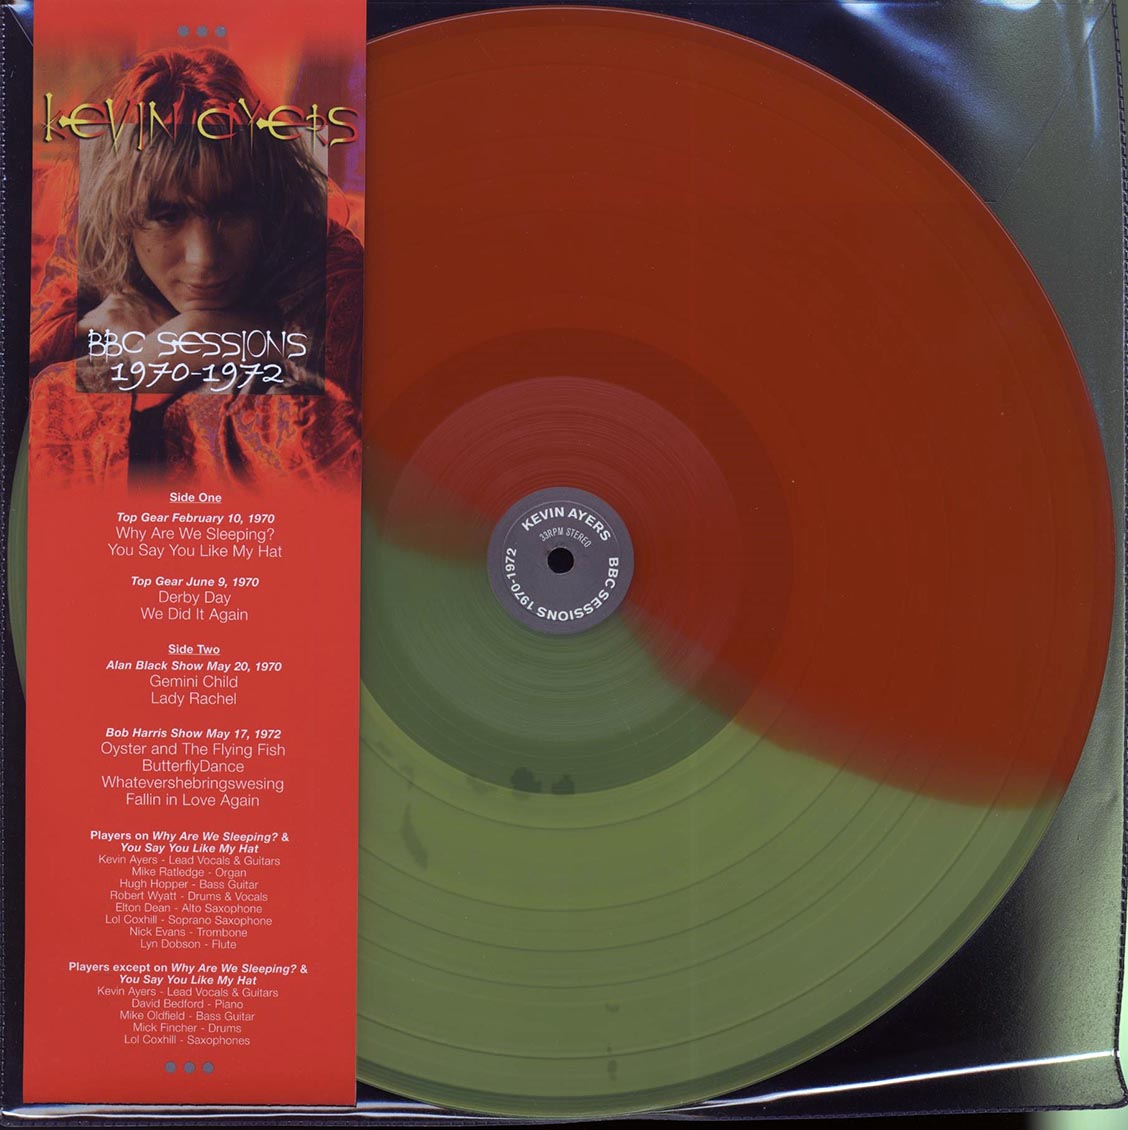 Kevin Ayers - BBC Sessions 1970-1972 (ltd. ed.) (colored vinyl) - Vinyl LP